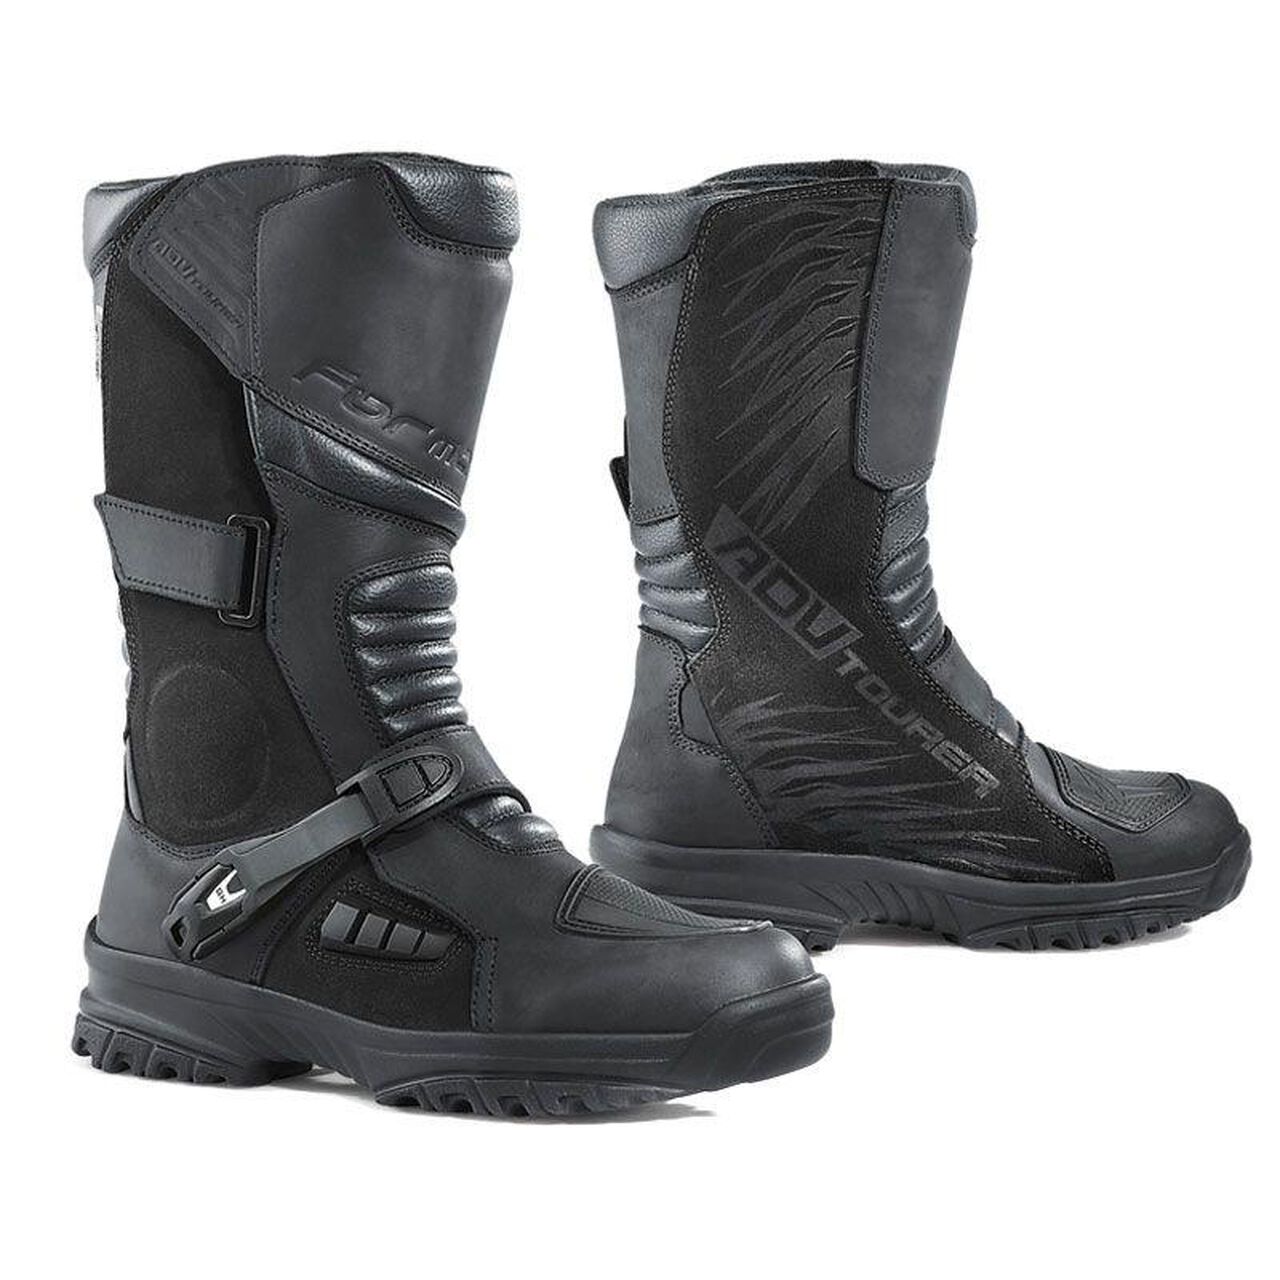 ADV Tourer Leather Boot black